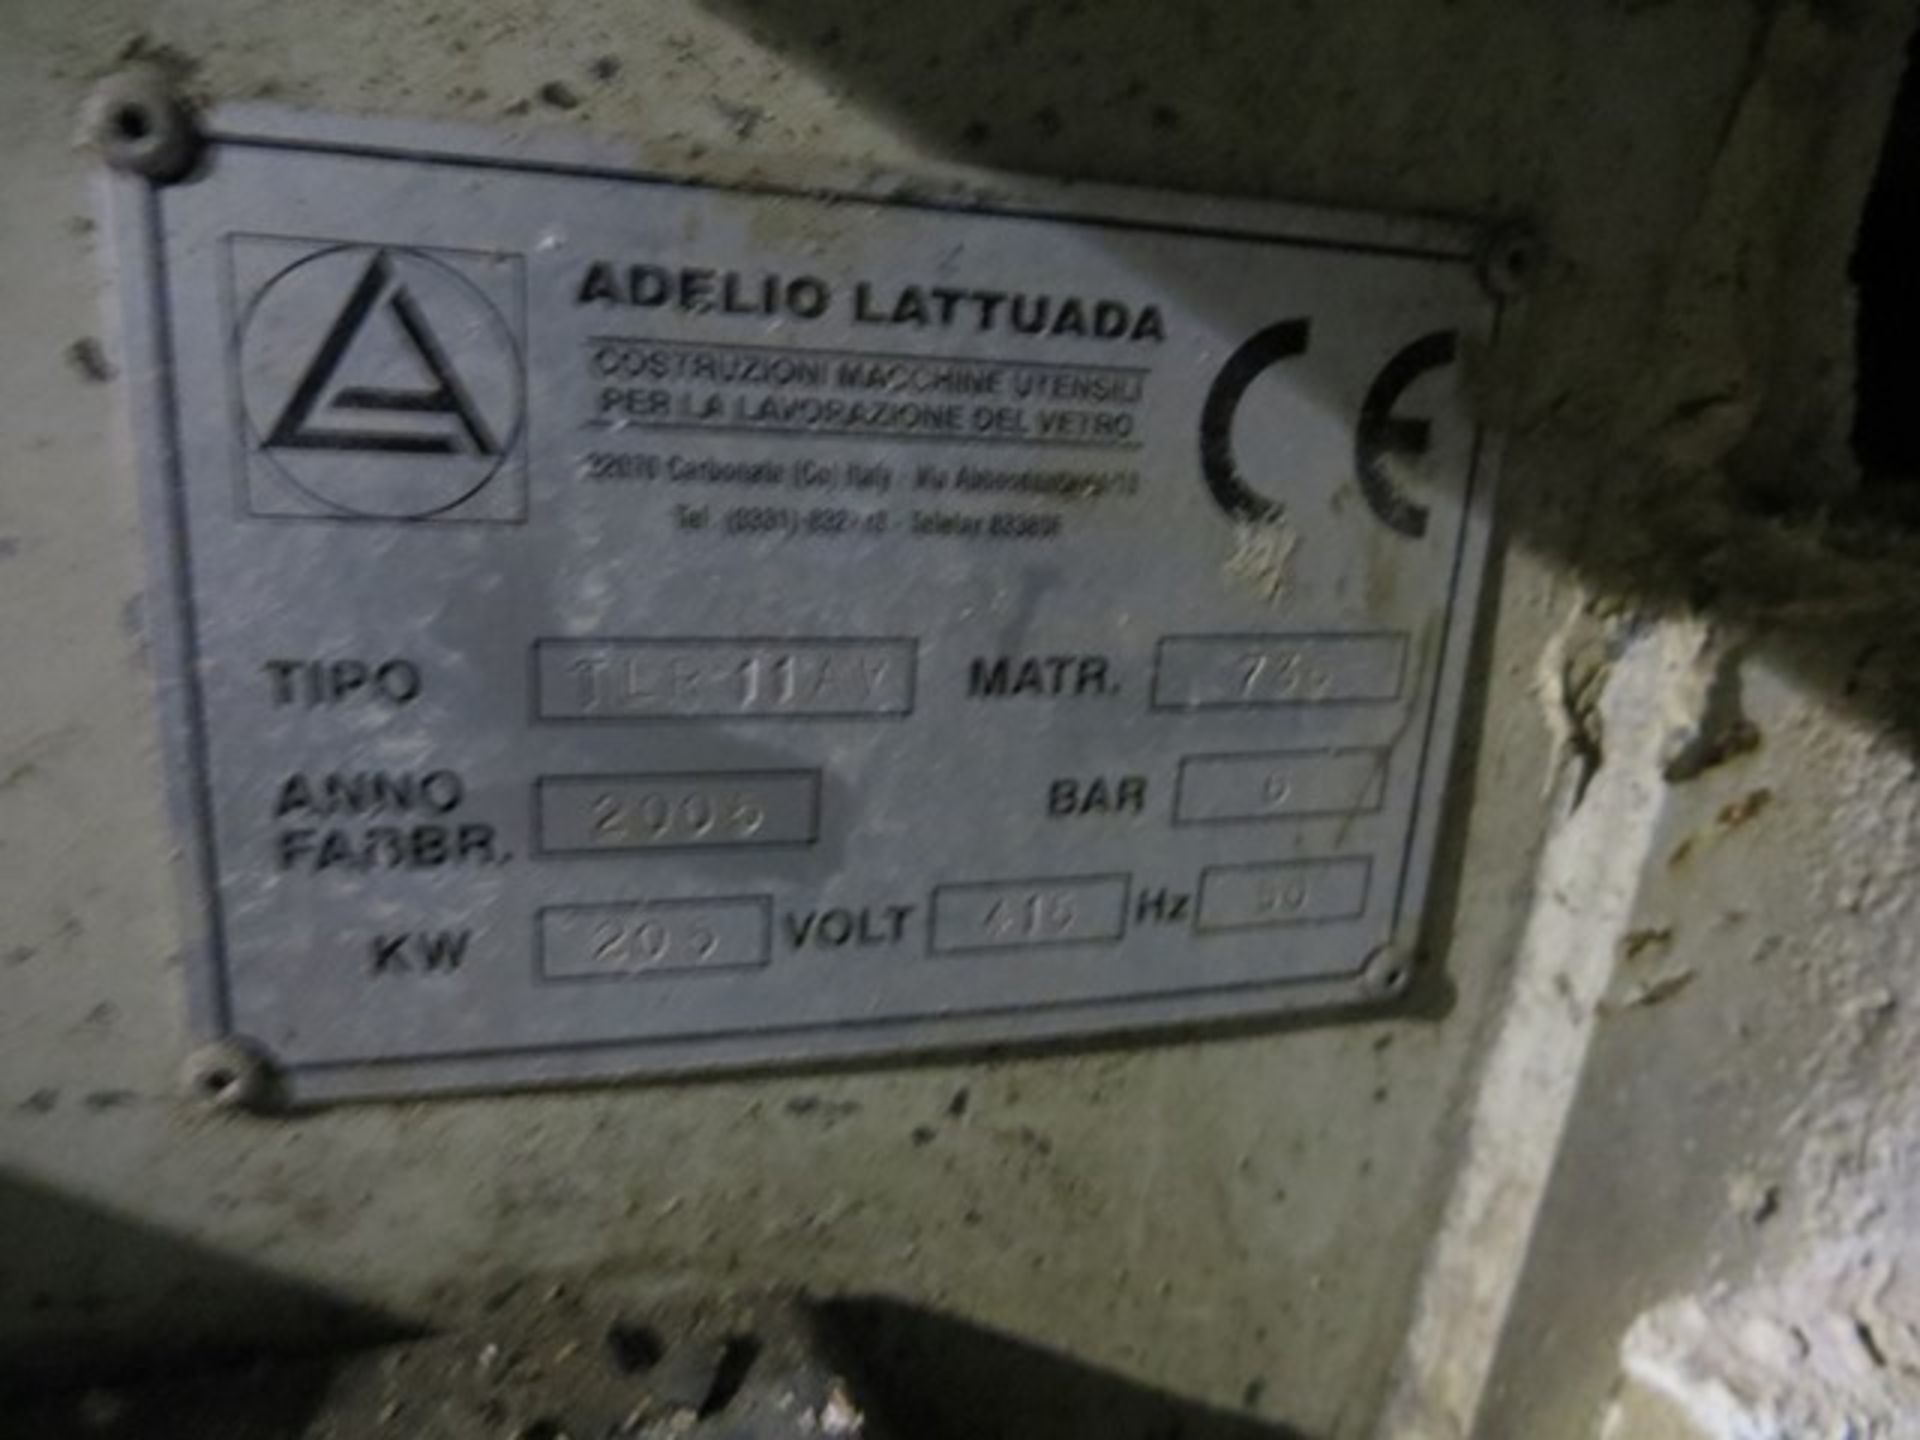 Adelio Lattuada ILIIAV edge polishing / buffing machine 9m wide x 3.9m high complete with - Image 4 of 5